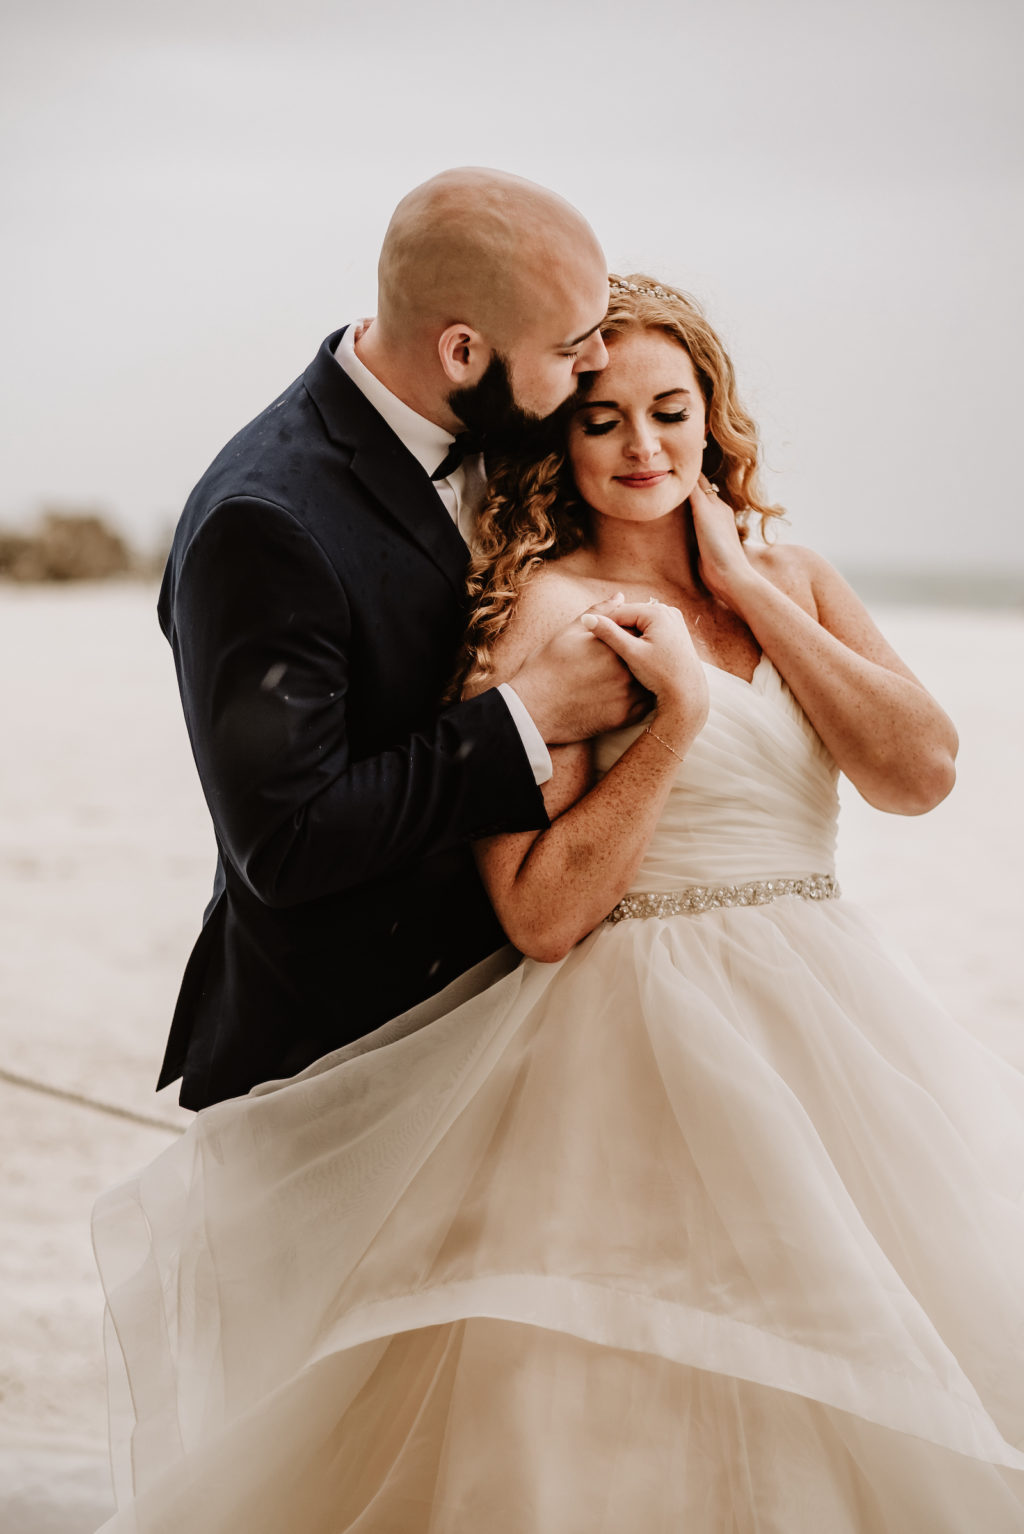 Florida Bride and Groom Romantic Dark and Moody Wedding Portrait on the Beach